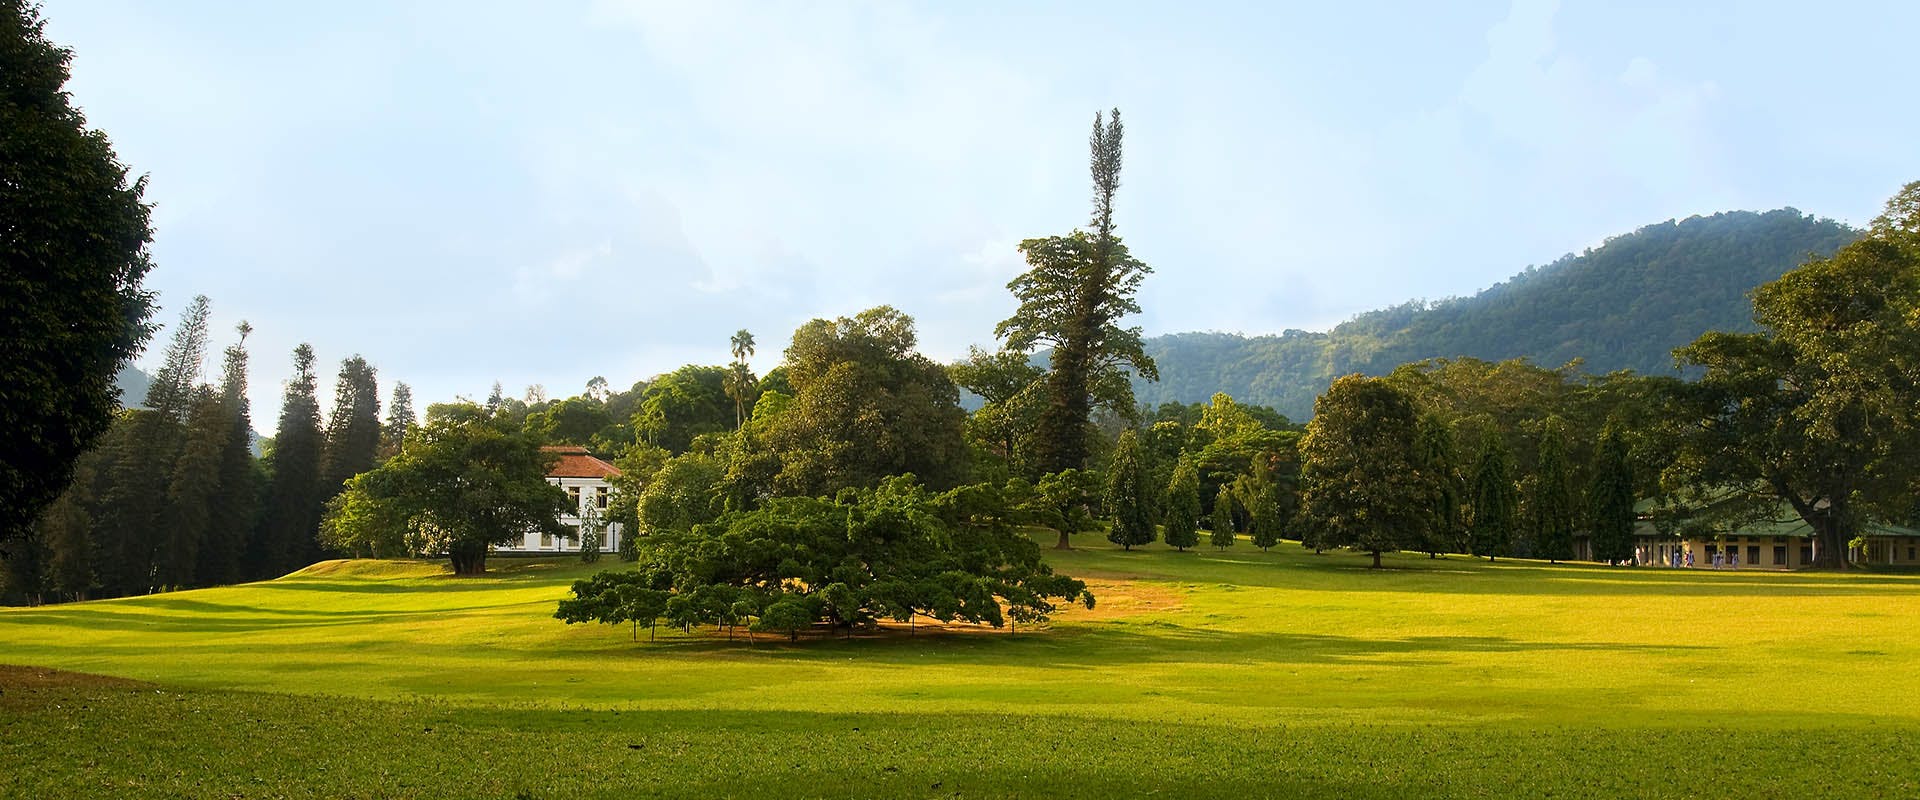 Royal Peradeniya Botanic Gardens Kandy Sri Lanka Hanthana